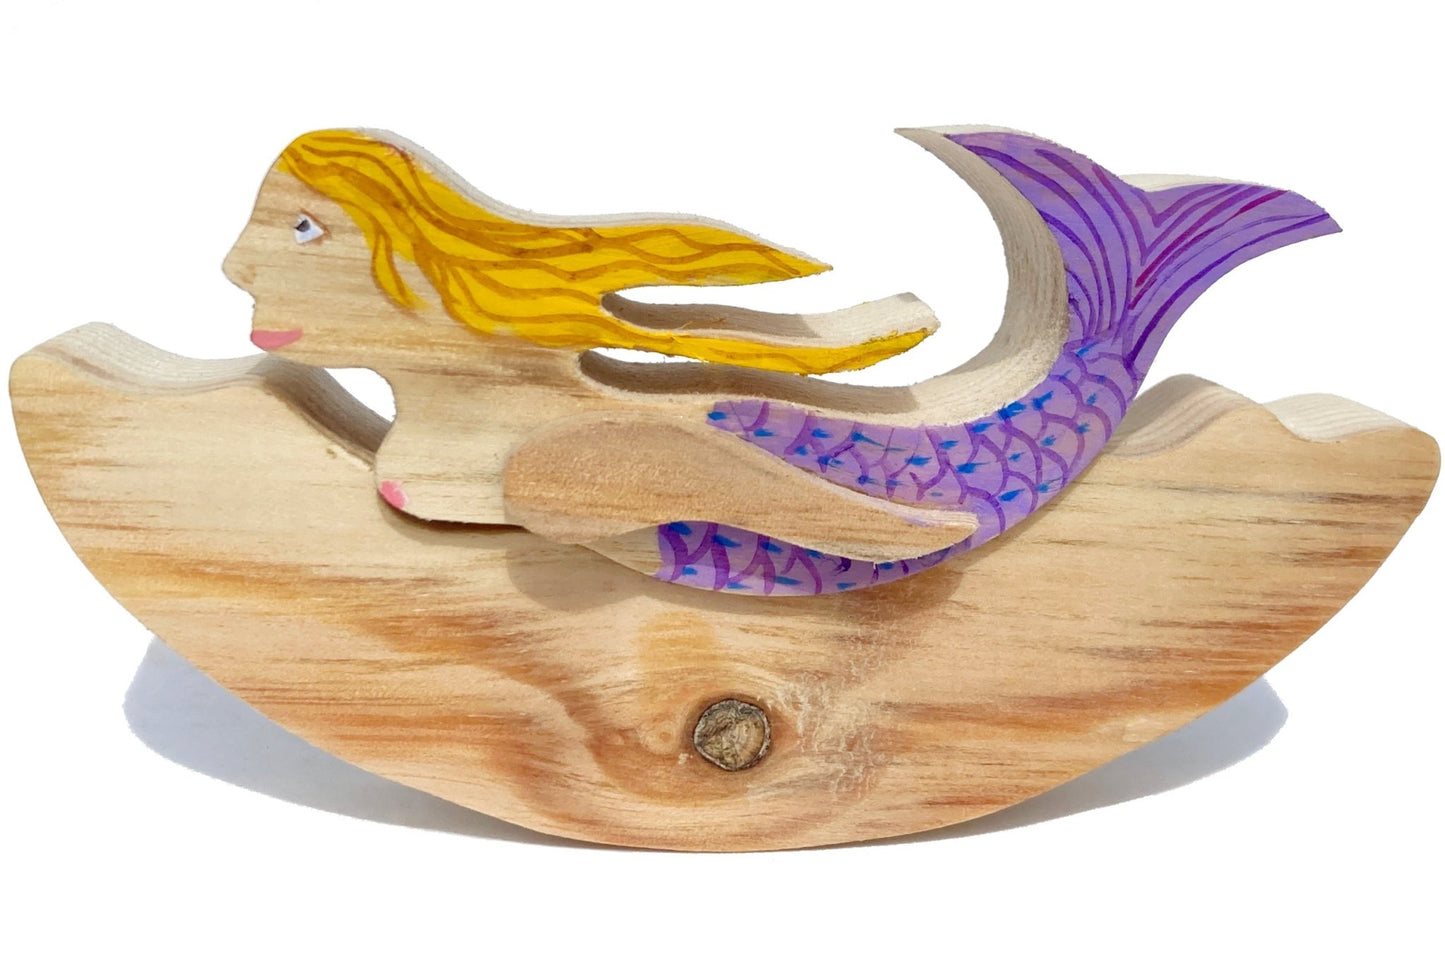 Mermaid Wooden Ornament - Interlocking Rocking Sculpture - East Neuk Beach Crafts